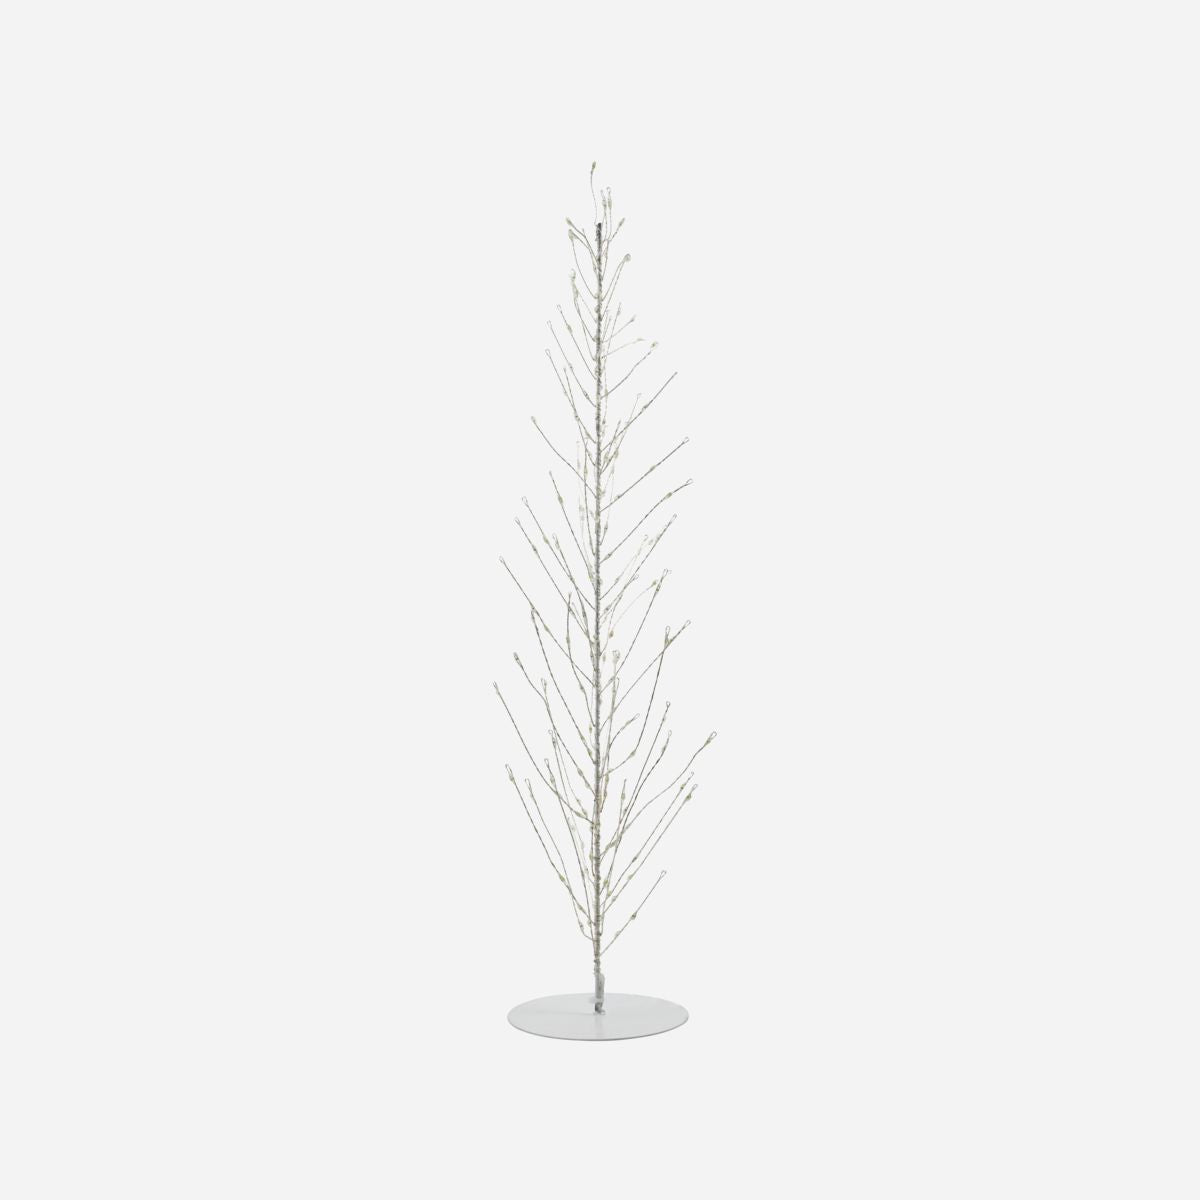 Husdoktor julgran i ståltråd, glöd, vit-h: 60 cm, dia: 12 cm